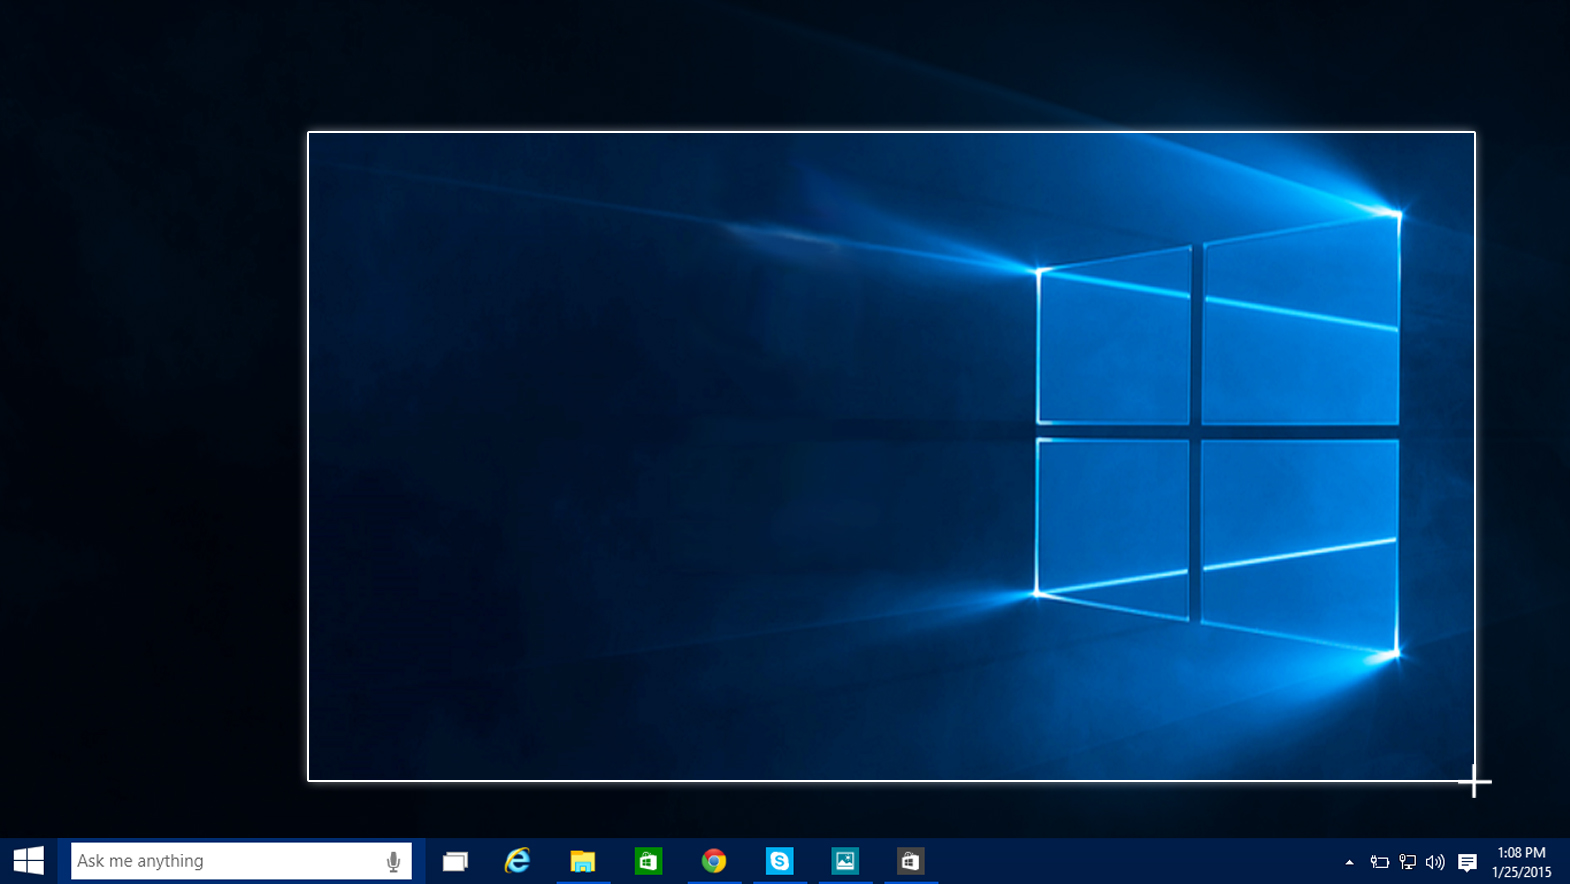 windows 10 pro operating system